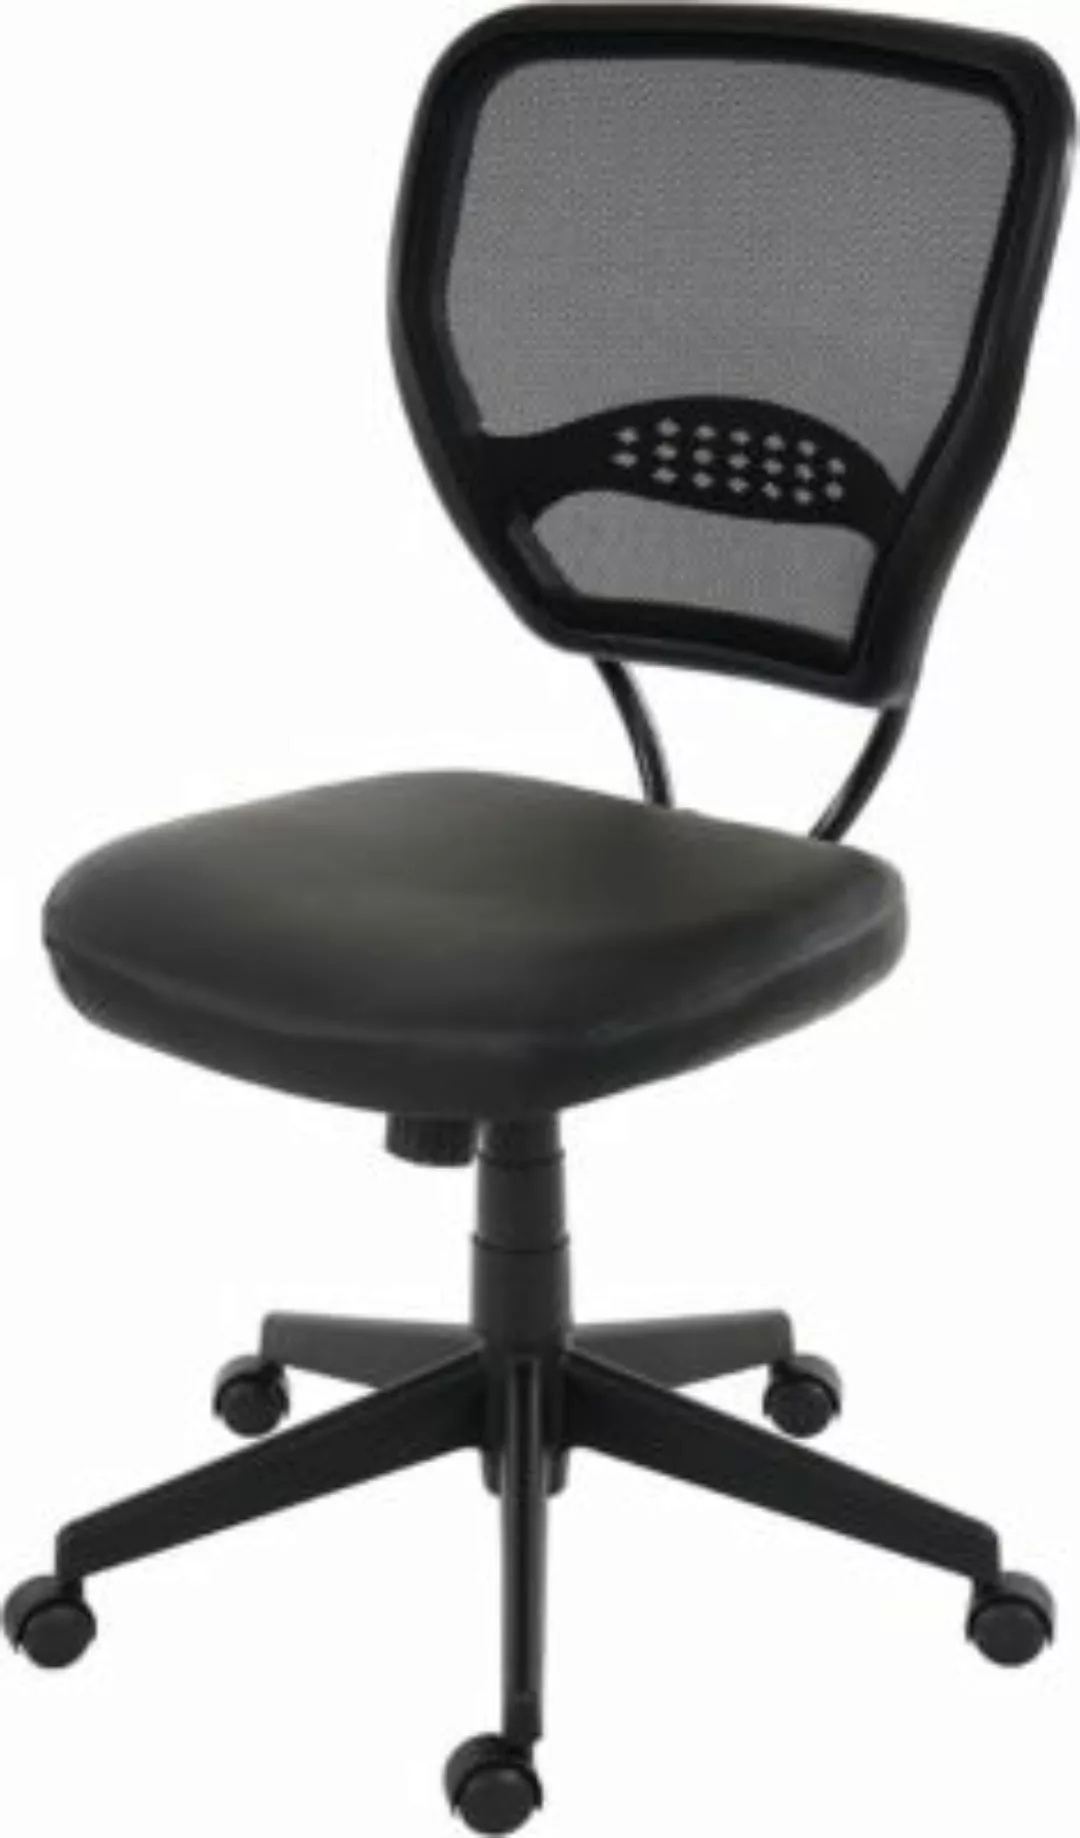 HWC Mendler Profi-Bürostuhl ohne Armlehnen 150 kg belastbar schwarz günstig online kaufen